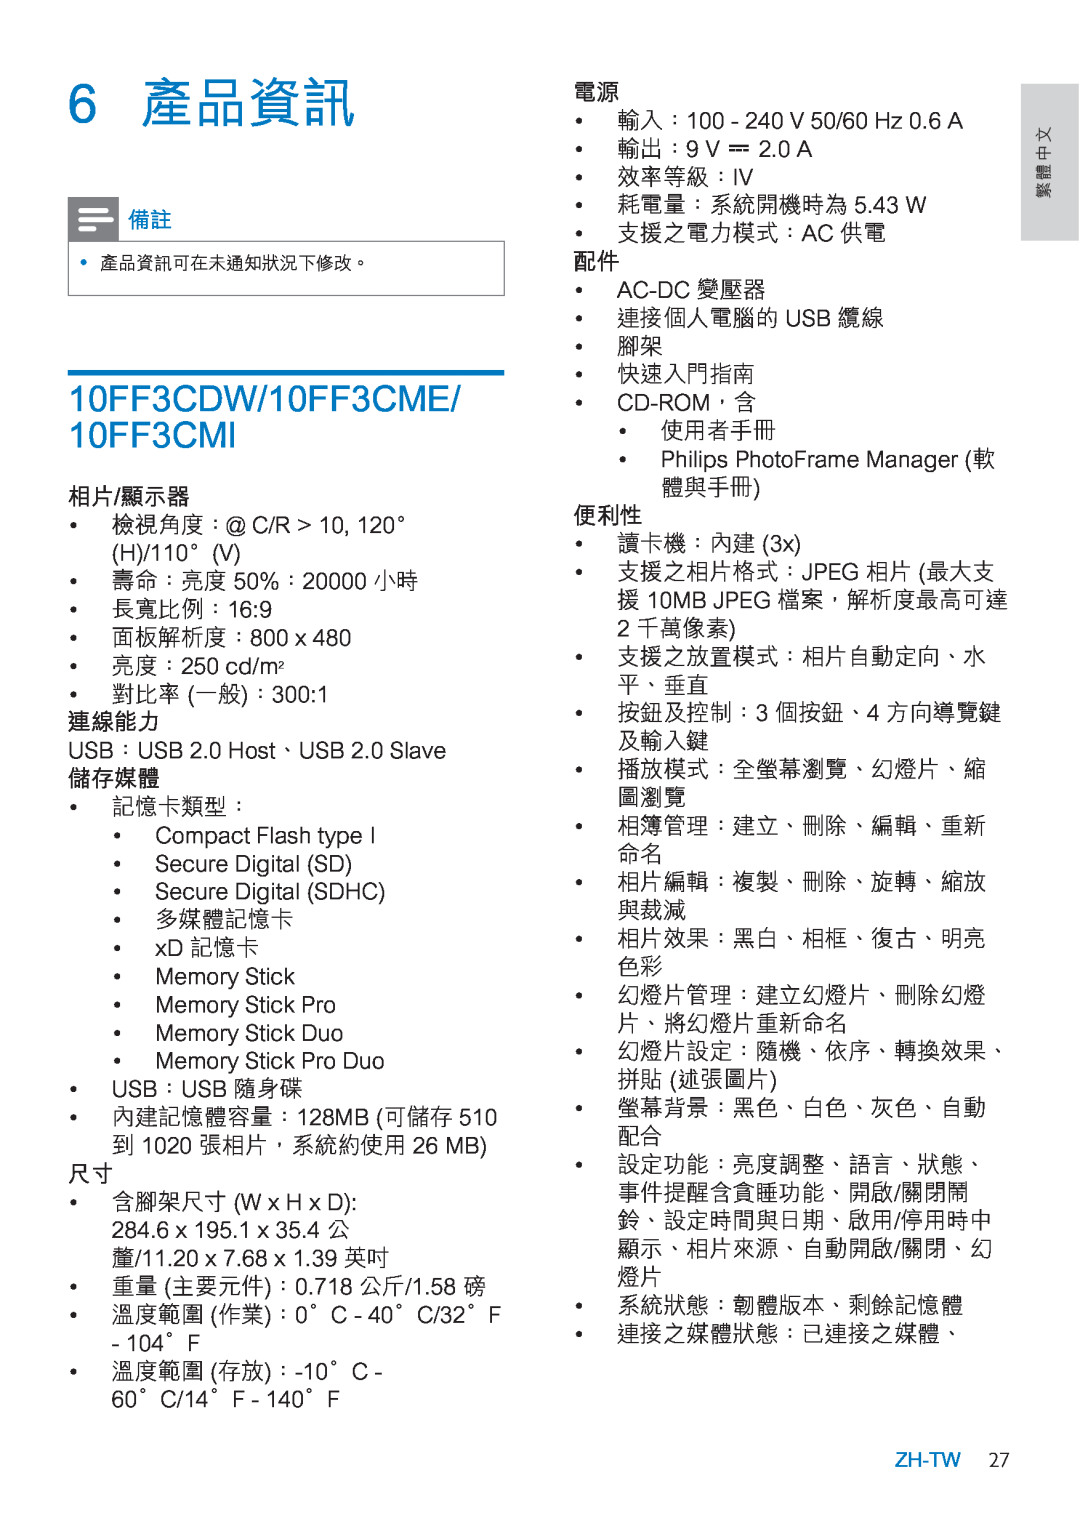 Philips 8FF3CME, 10FF3CMI manual  & &0 &0 